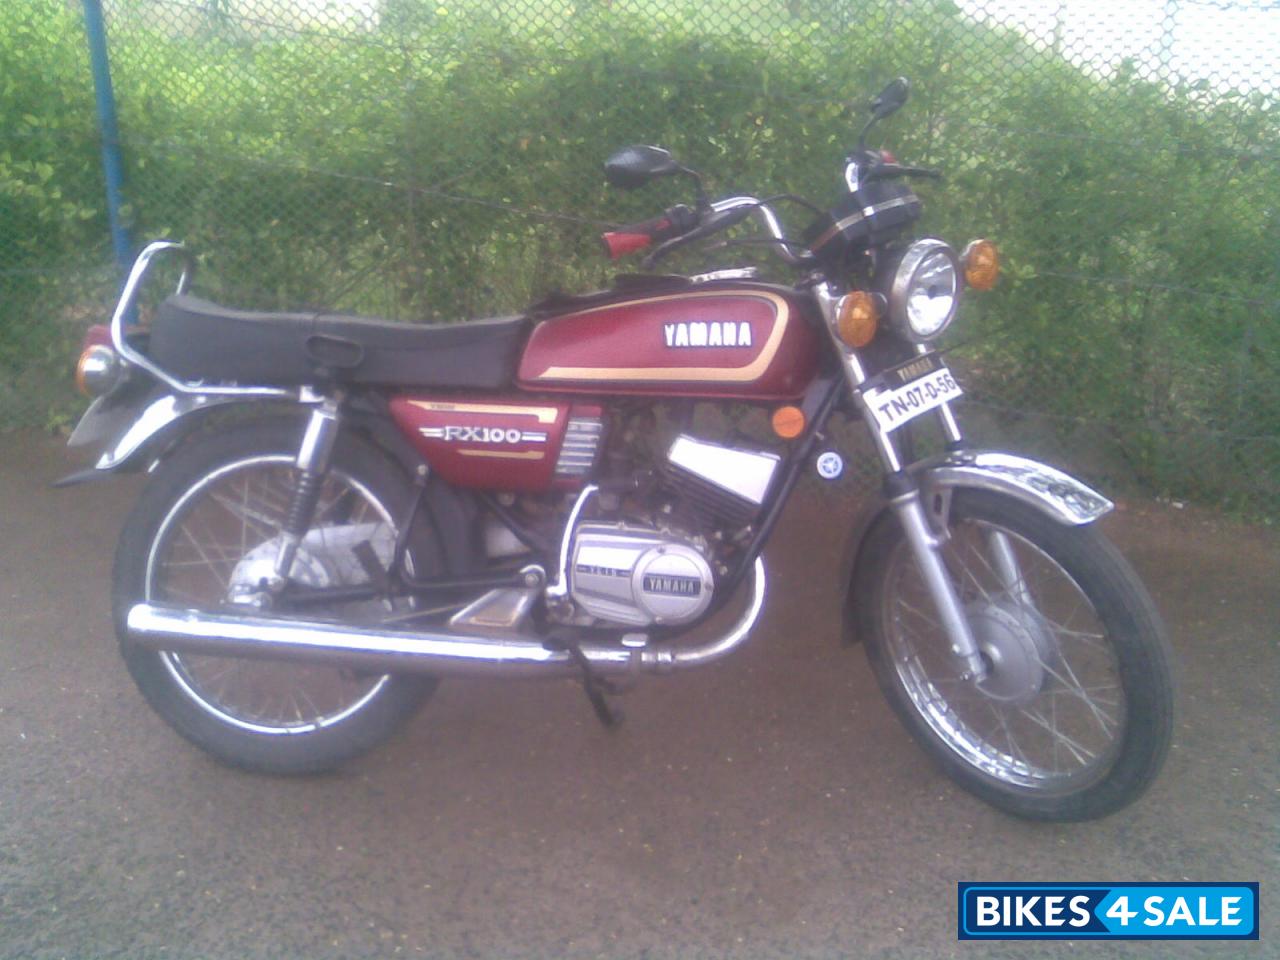 Yamaha Rx 100 New Bike Price In Chennai لم يسبق له مثيل الصور